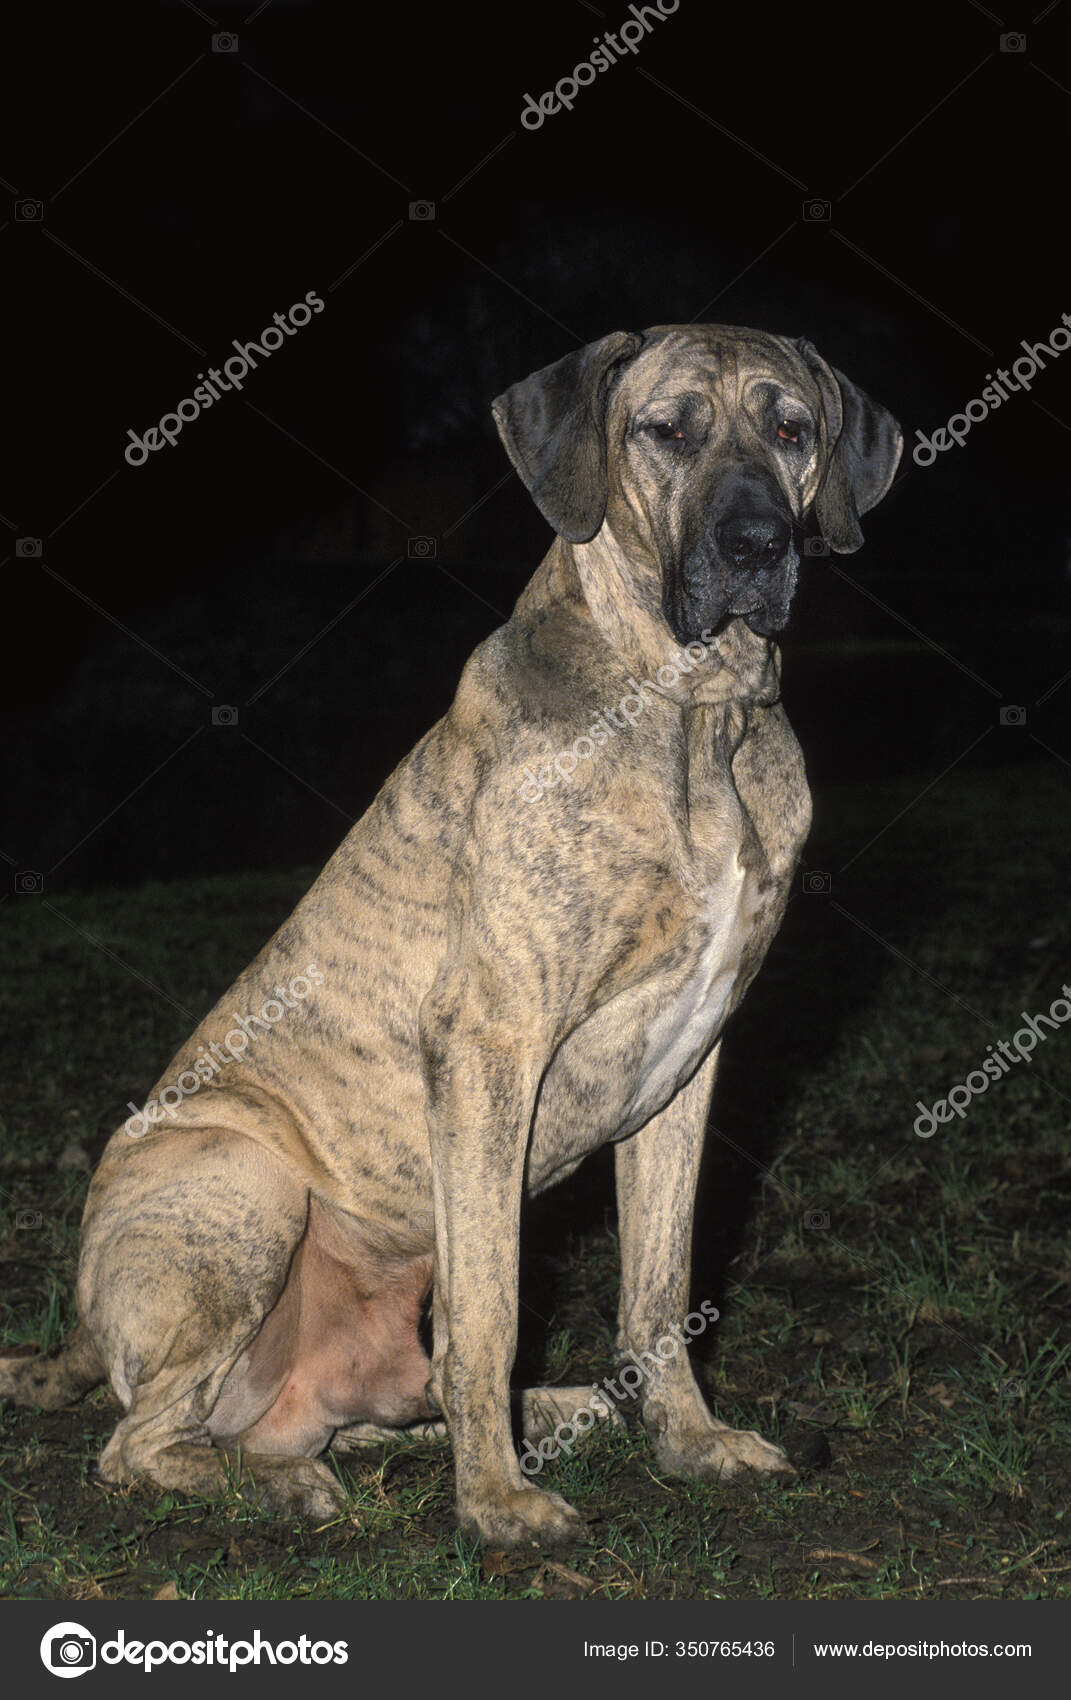 https://st3.depositphotos.com/8776626/35076/i/1600/depositphotos_350765436-stock-photo-fila-brasileiro-dog-breed-brazil.jpg